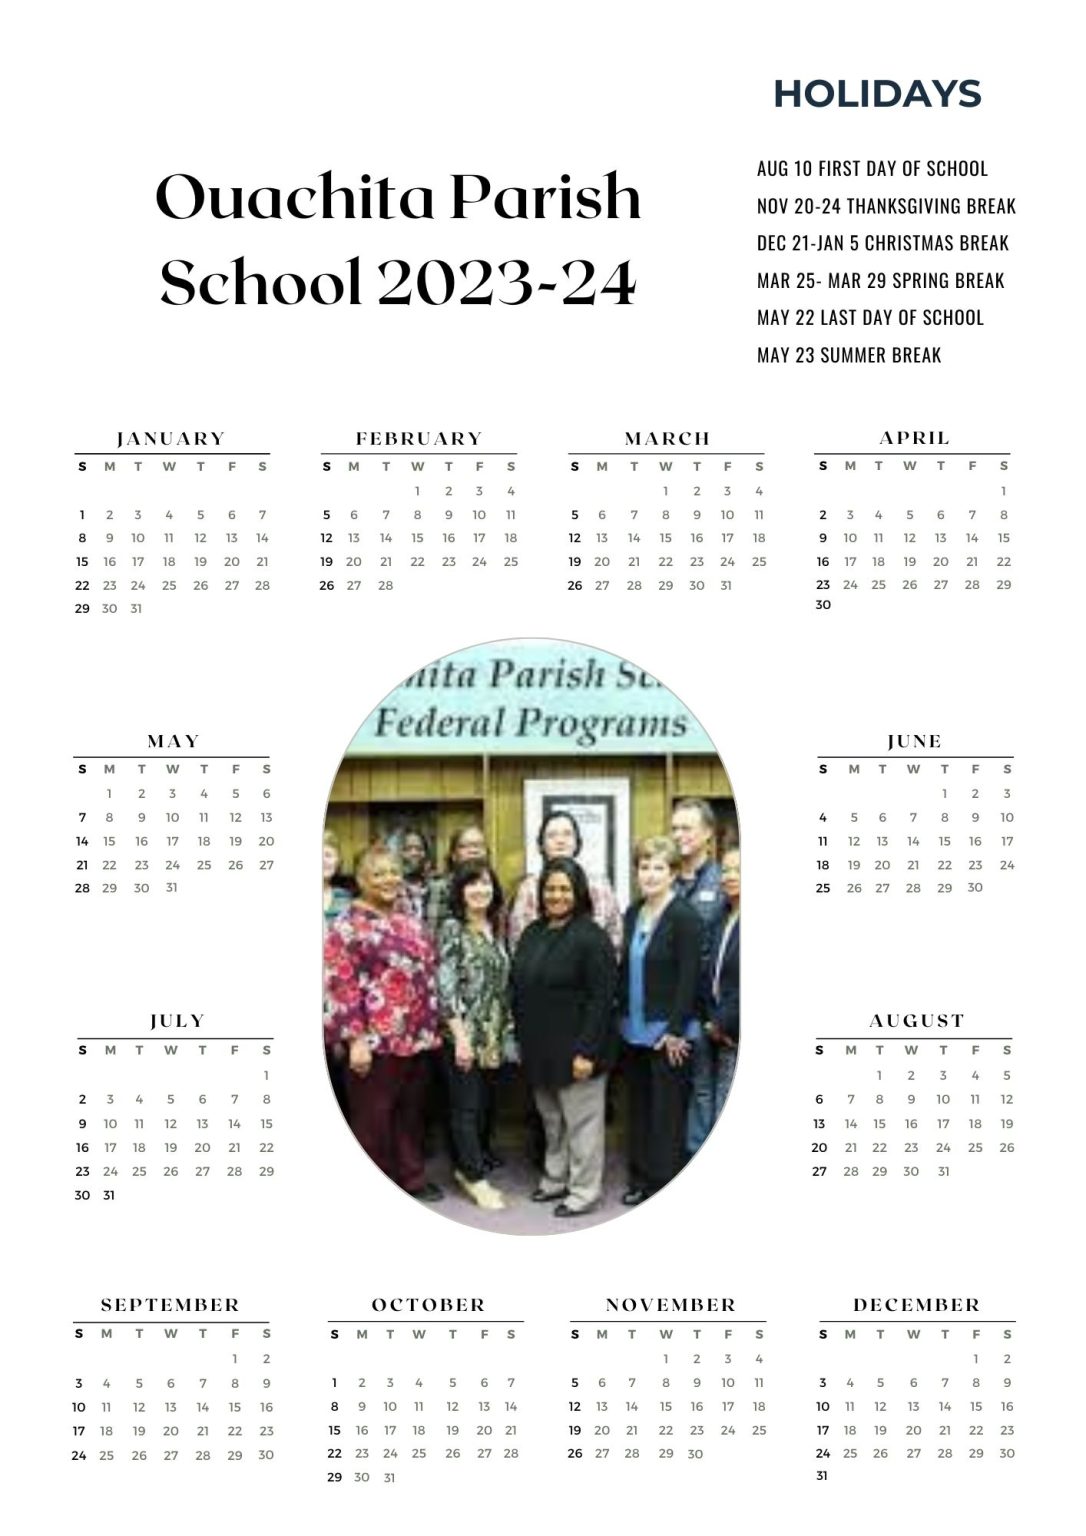 Ouachita Parish School Calendar Holidays 2023-2024